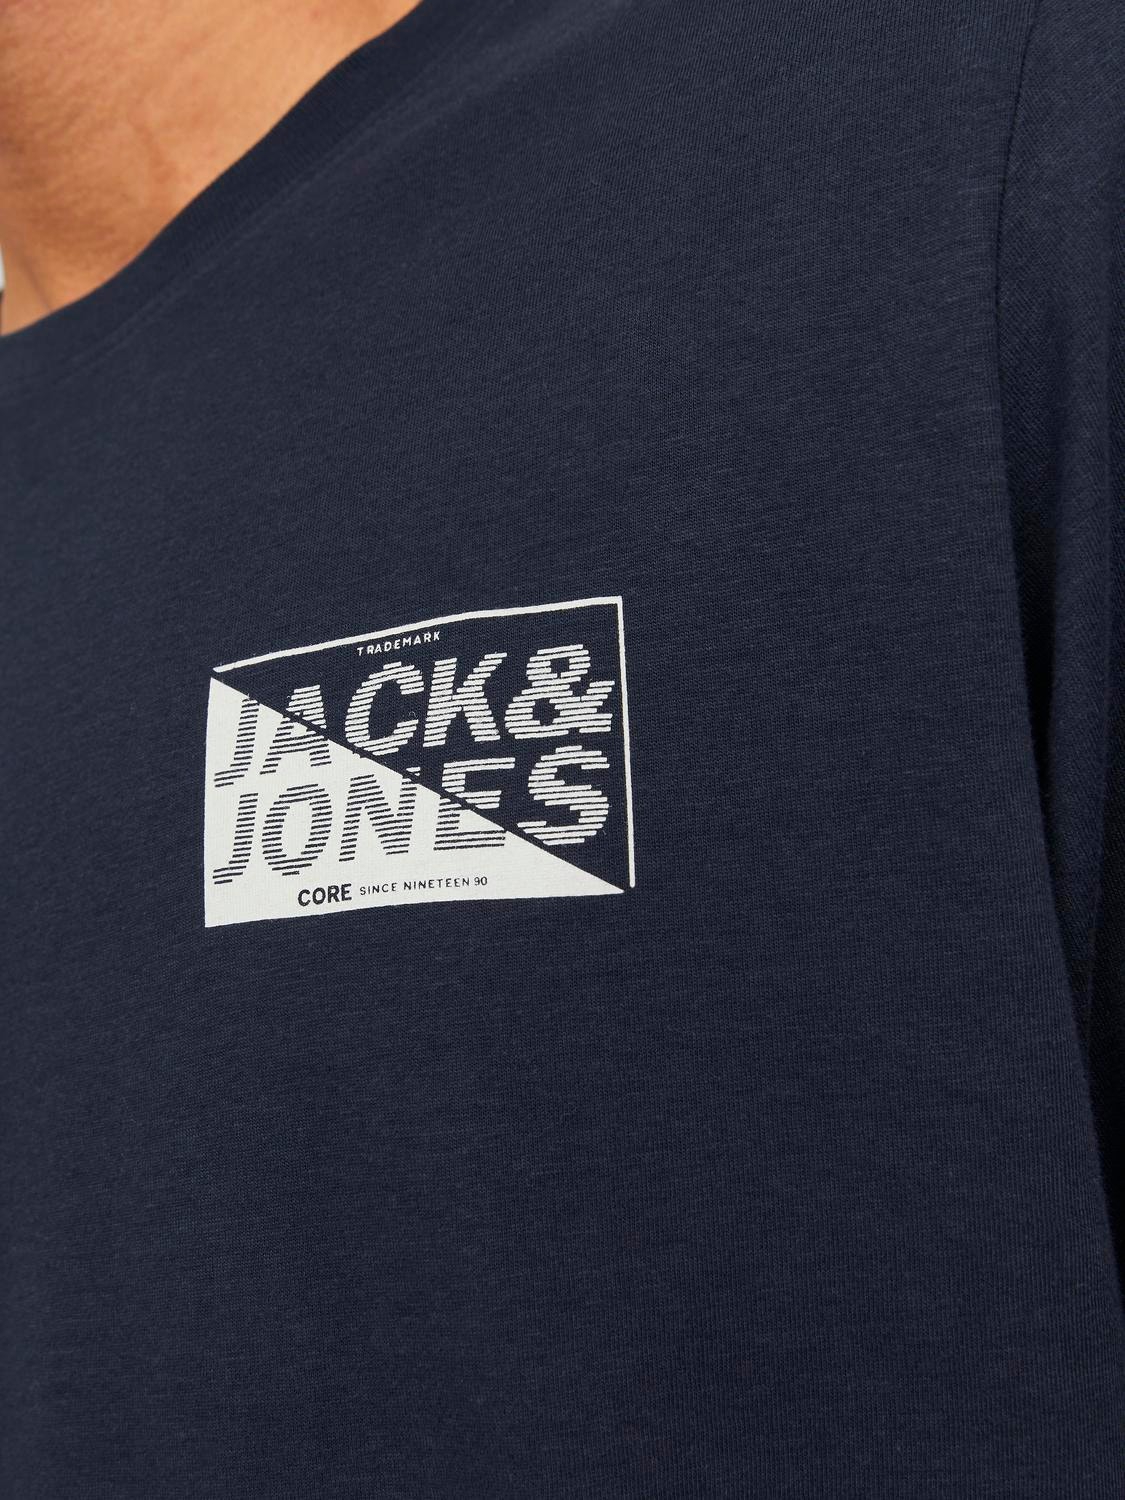 Buy Jack & Jones Navy Original Logo T-Shirt from Next USA